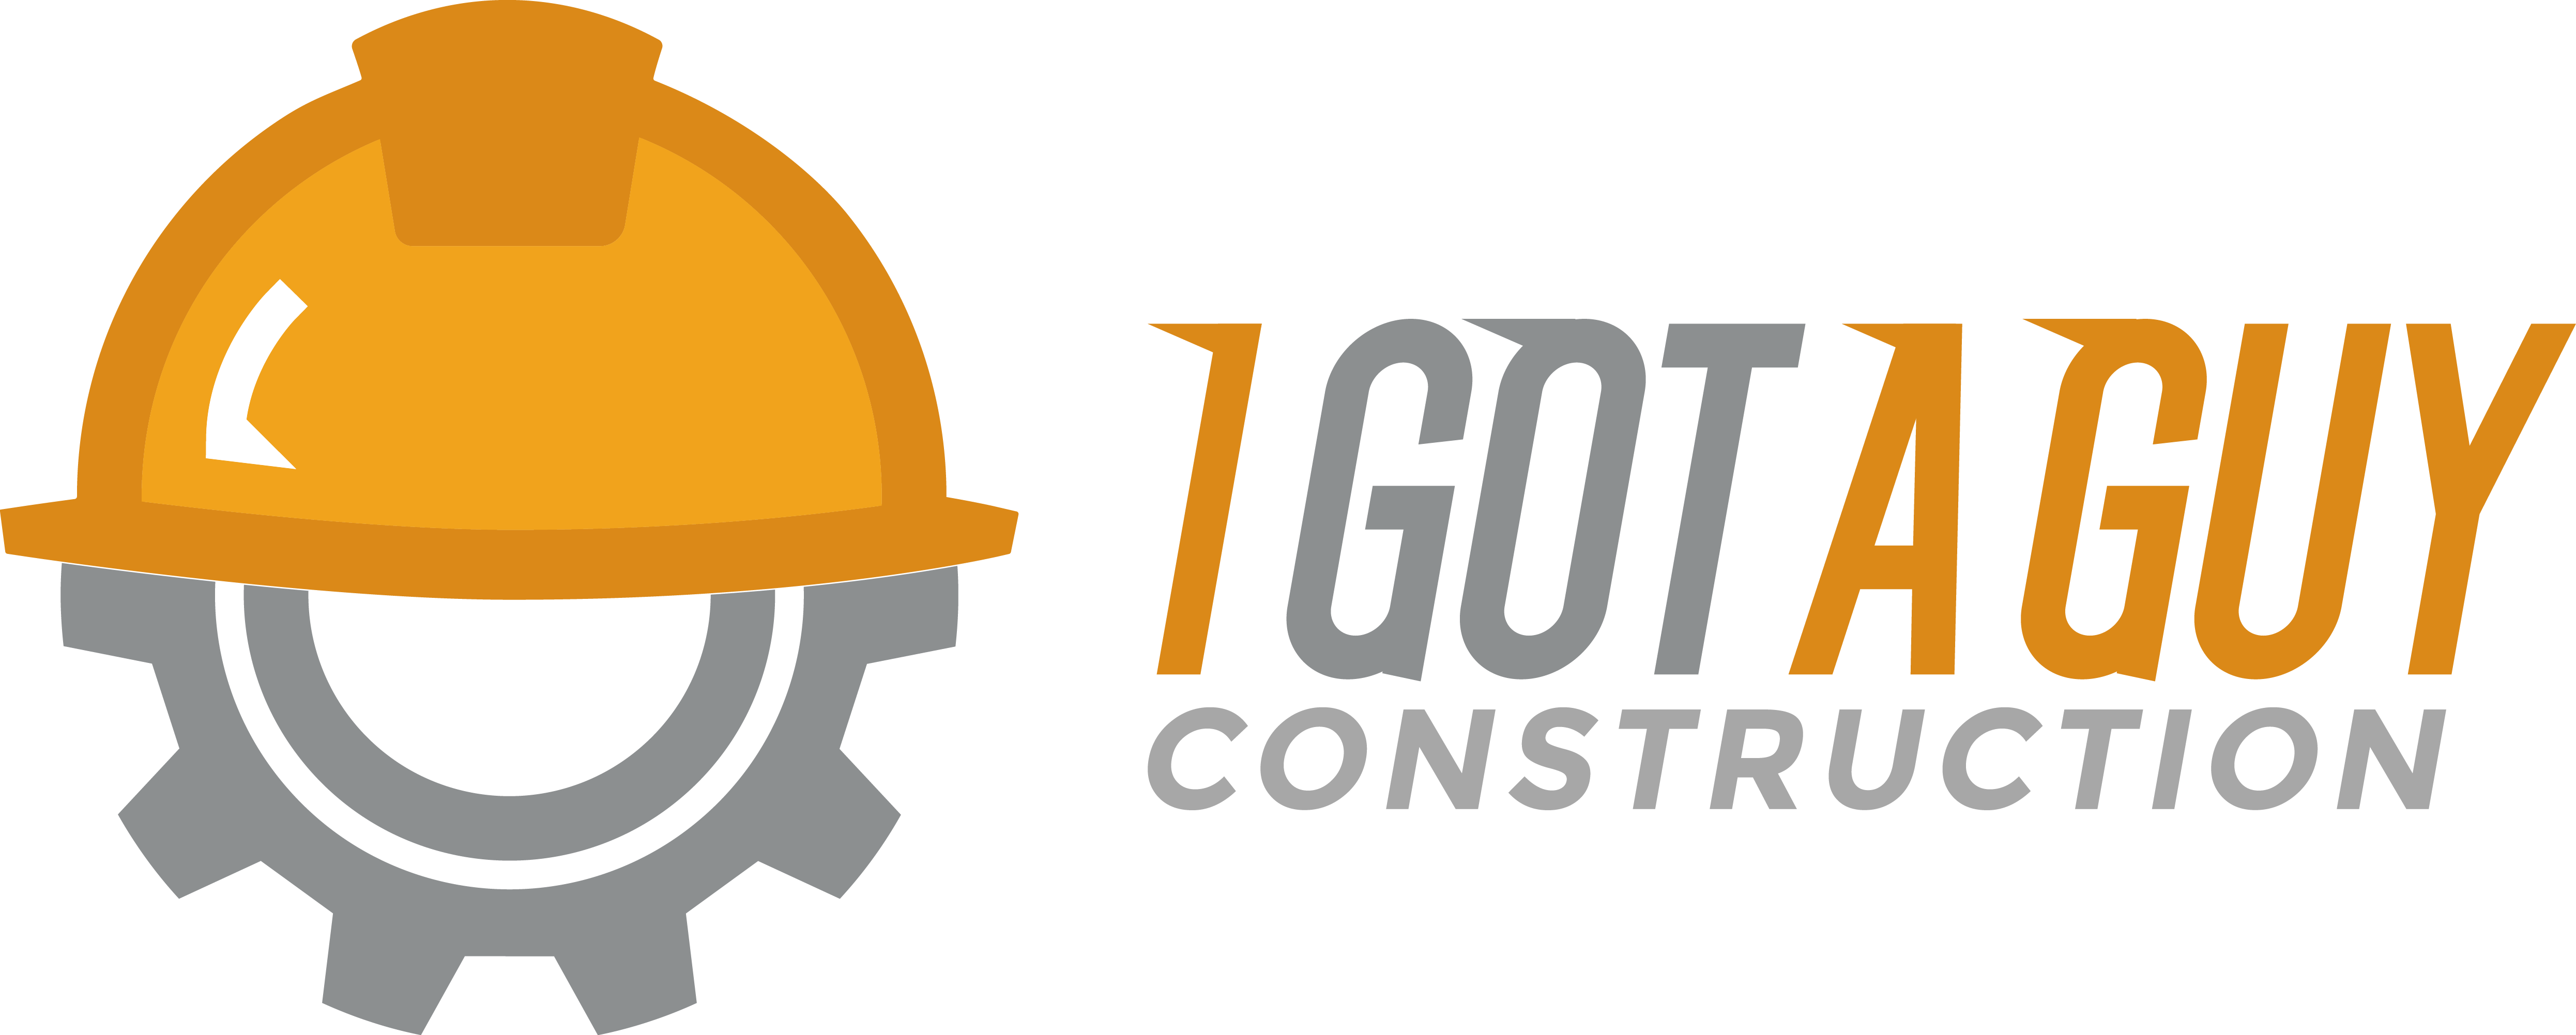 I Got A Guy Construction Logo